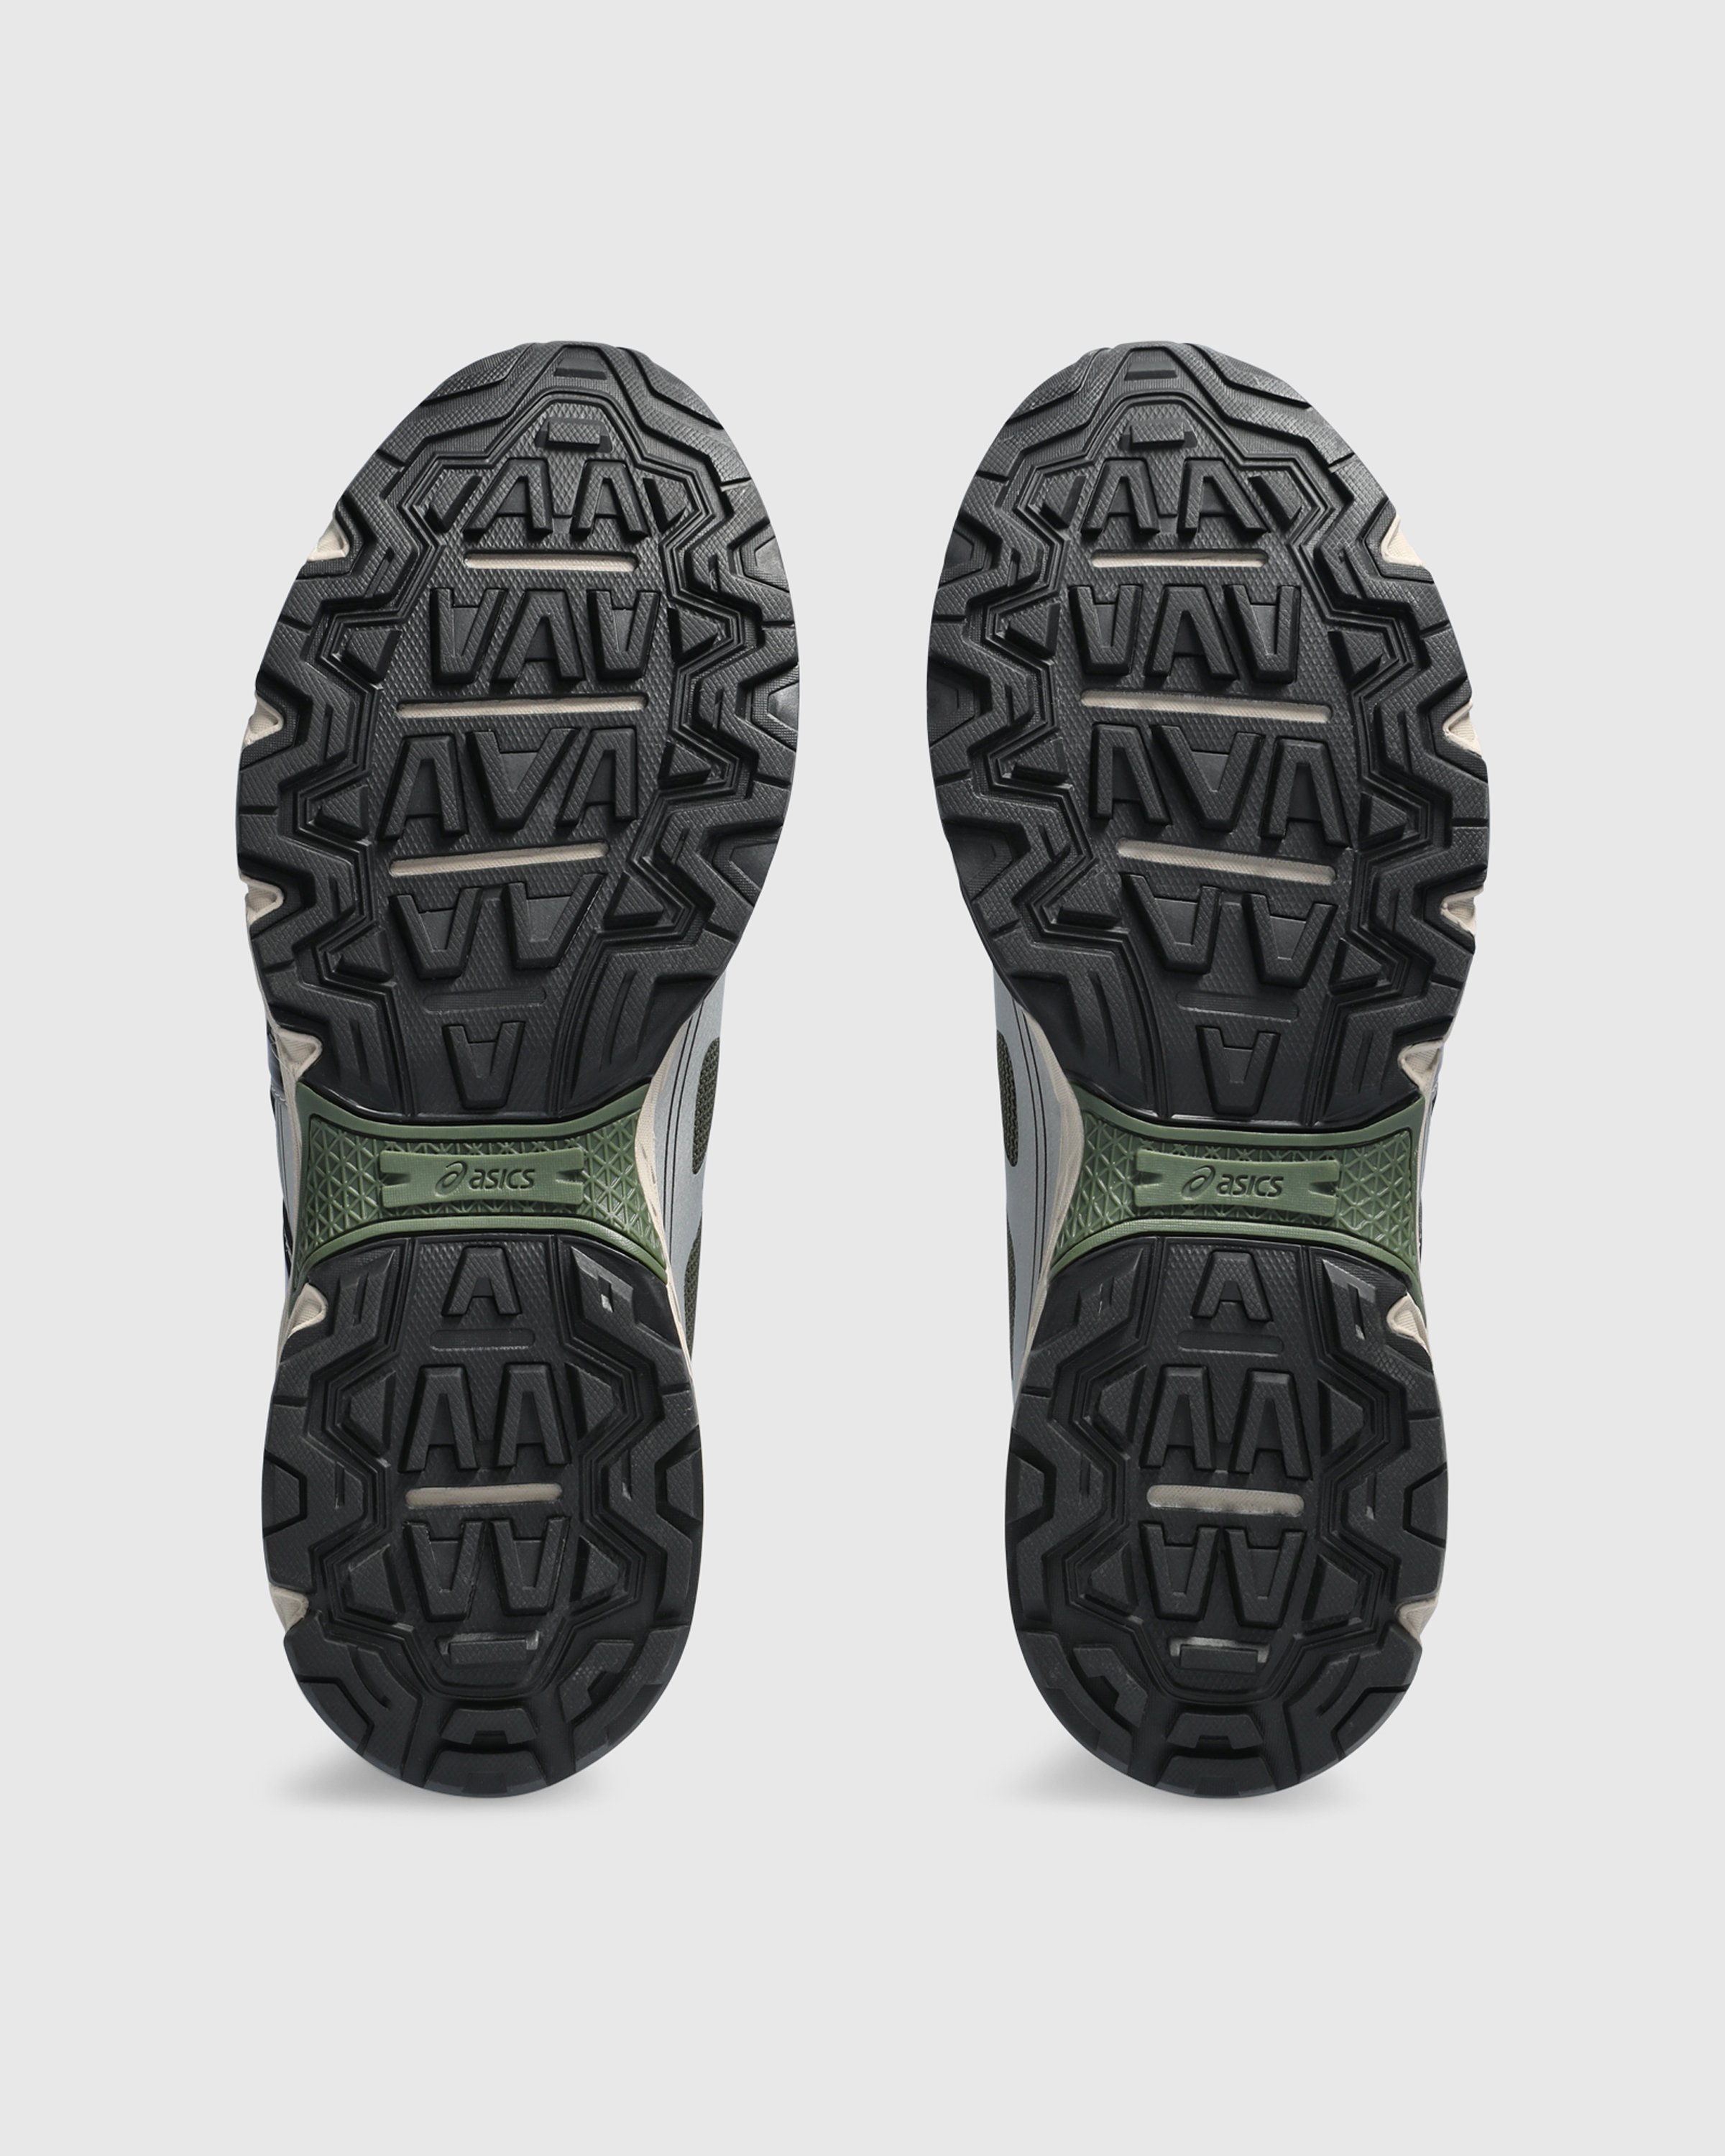 asics - GEL-VENTURE 6 NS Forest/Black - Footwear - Multi - Image 6